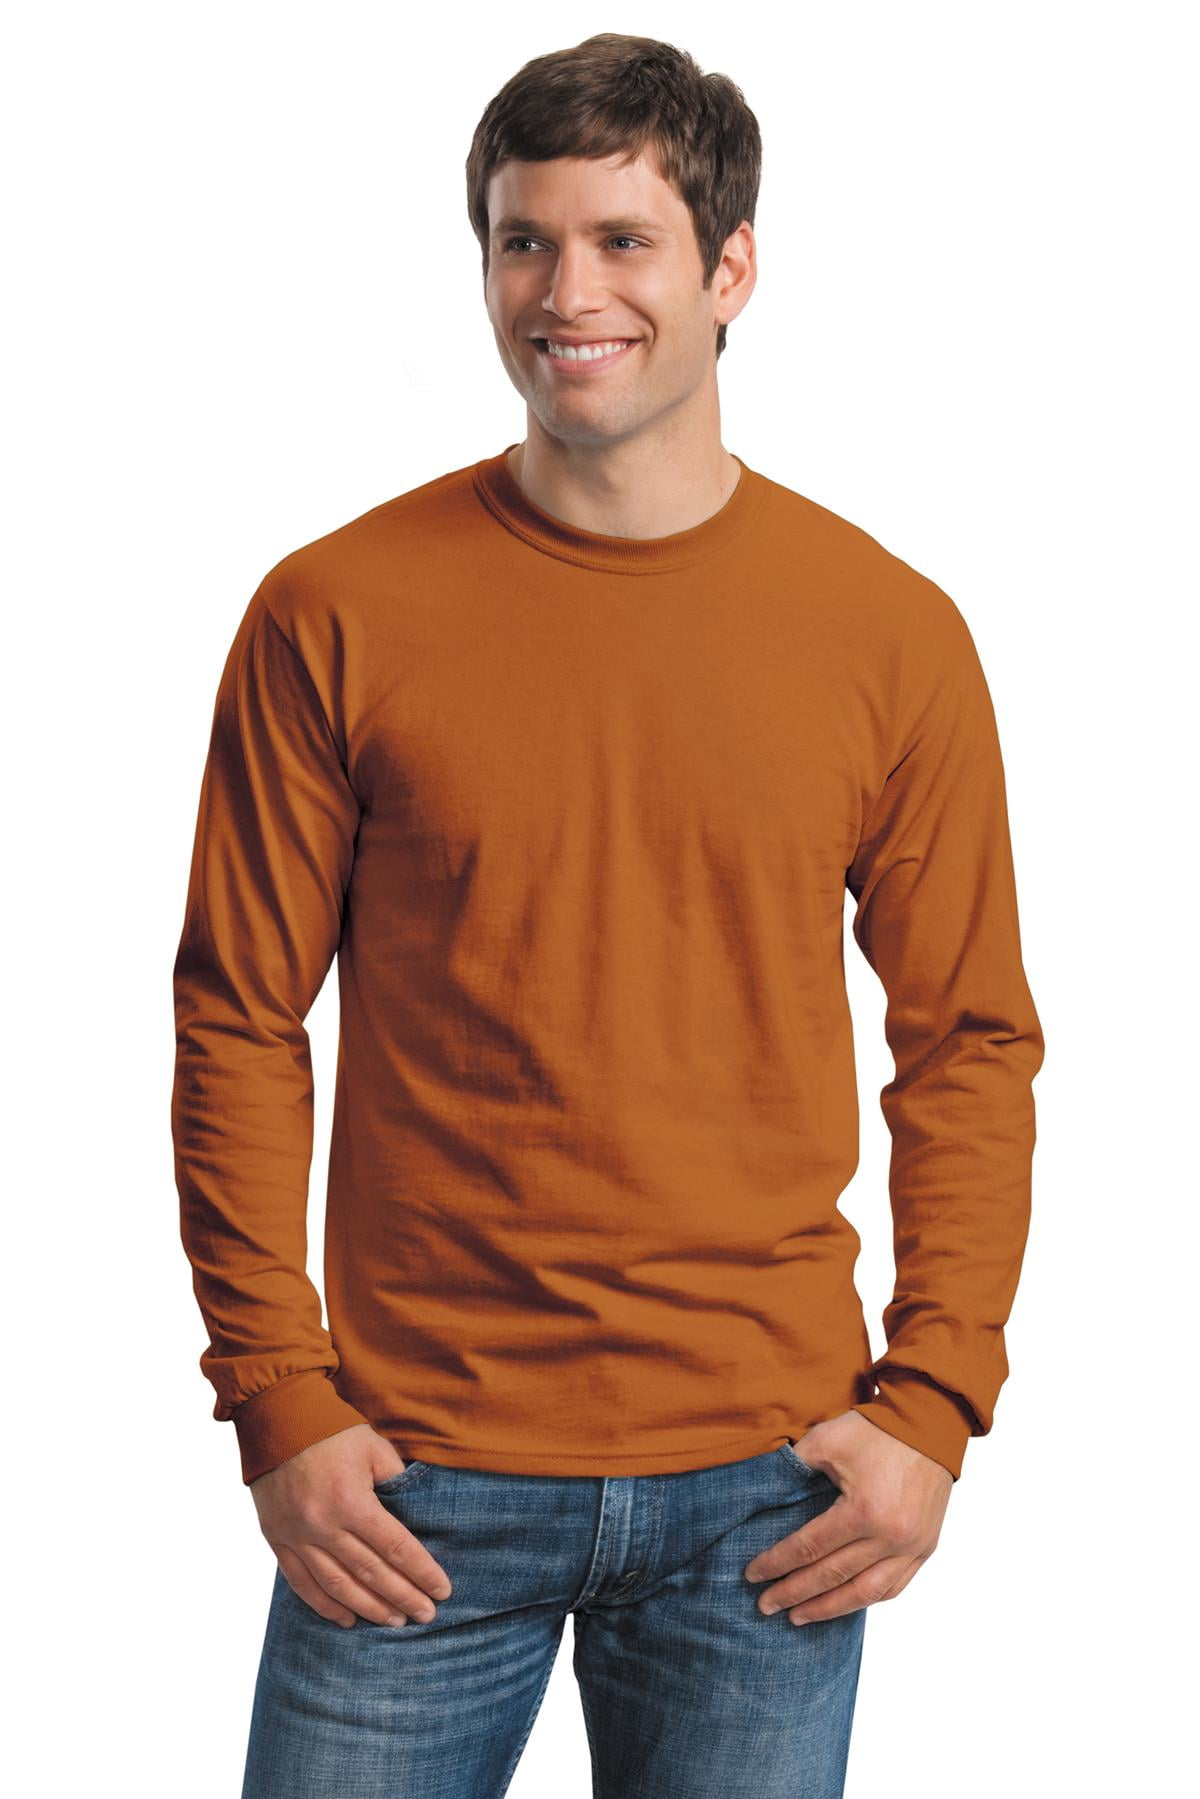 Gildan - Gildan Men's 100 Percent Cotton Long Sleeve T-Shirt - G2400 ...